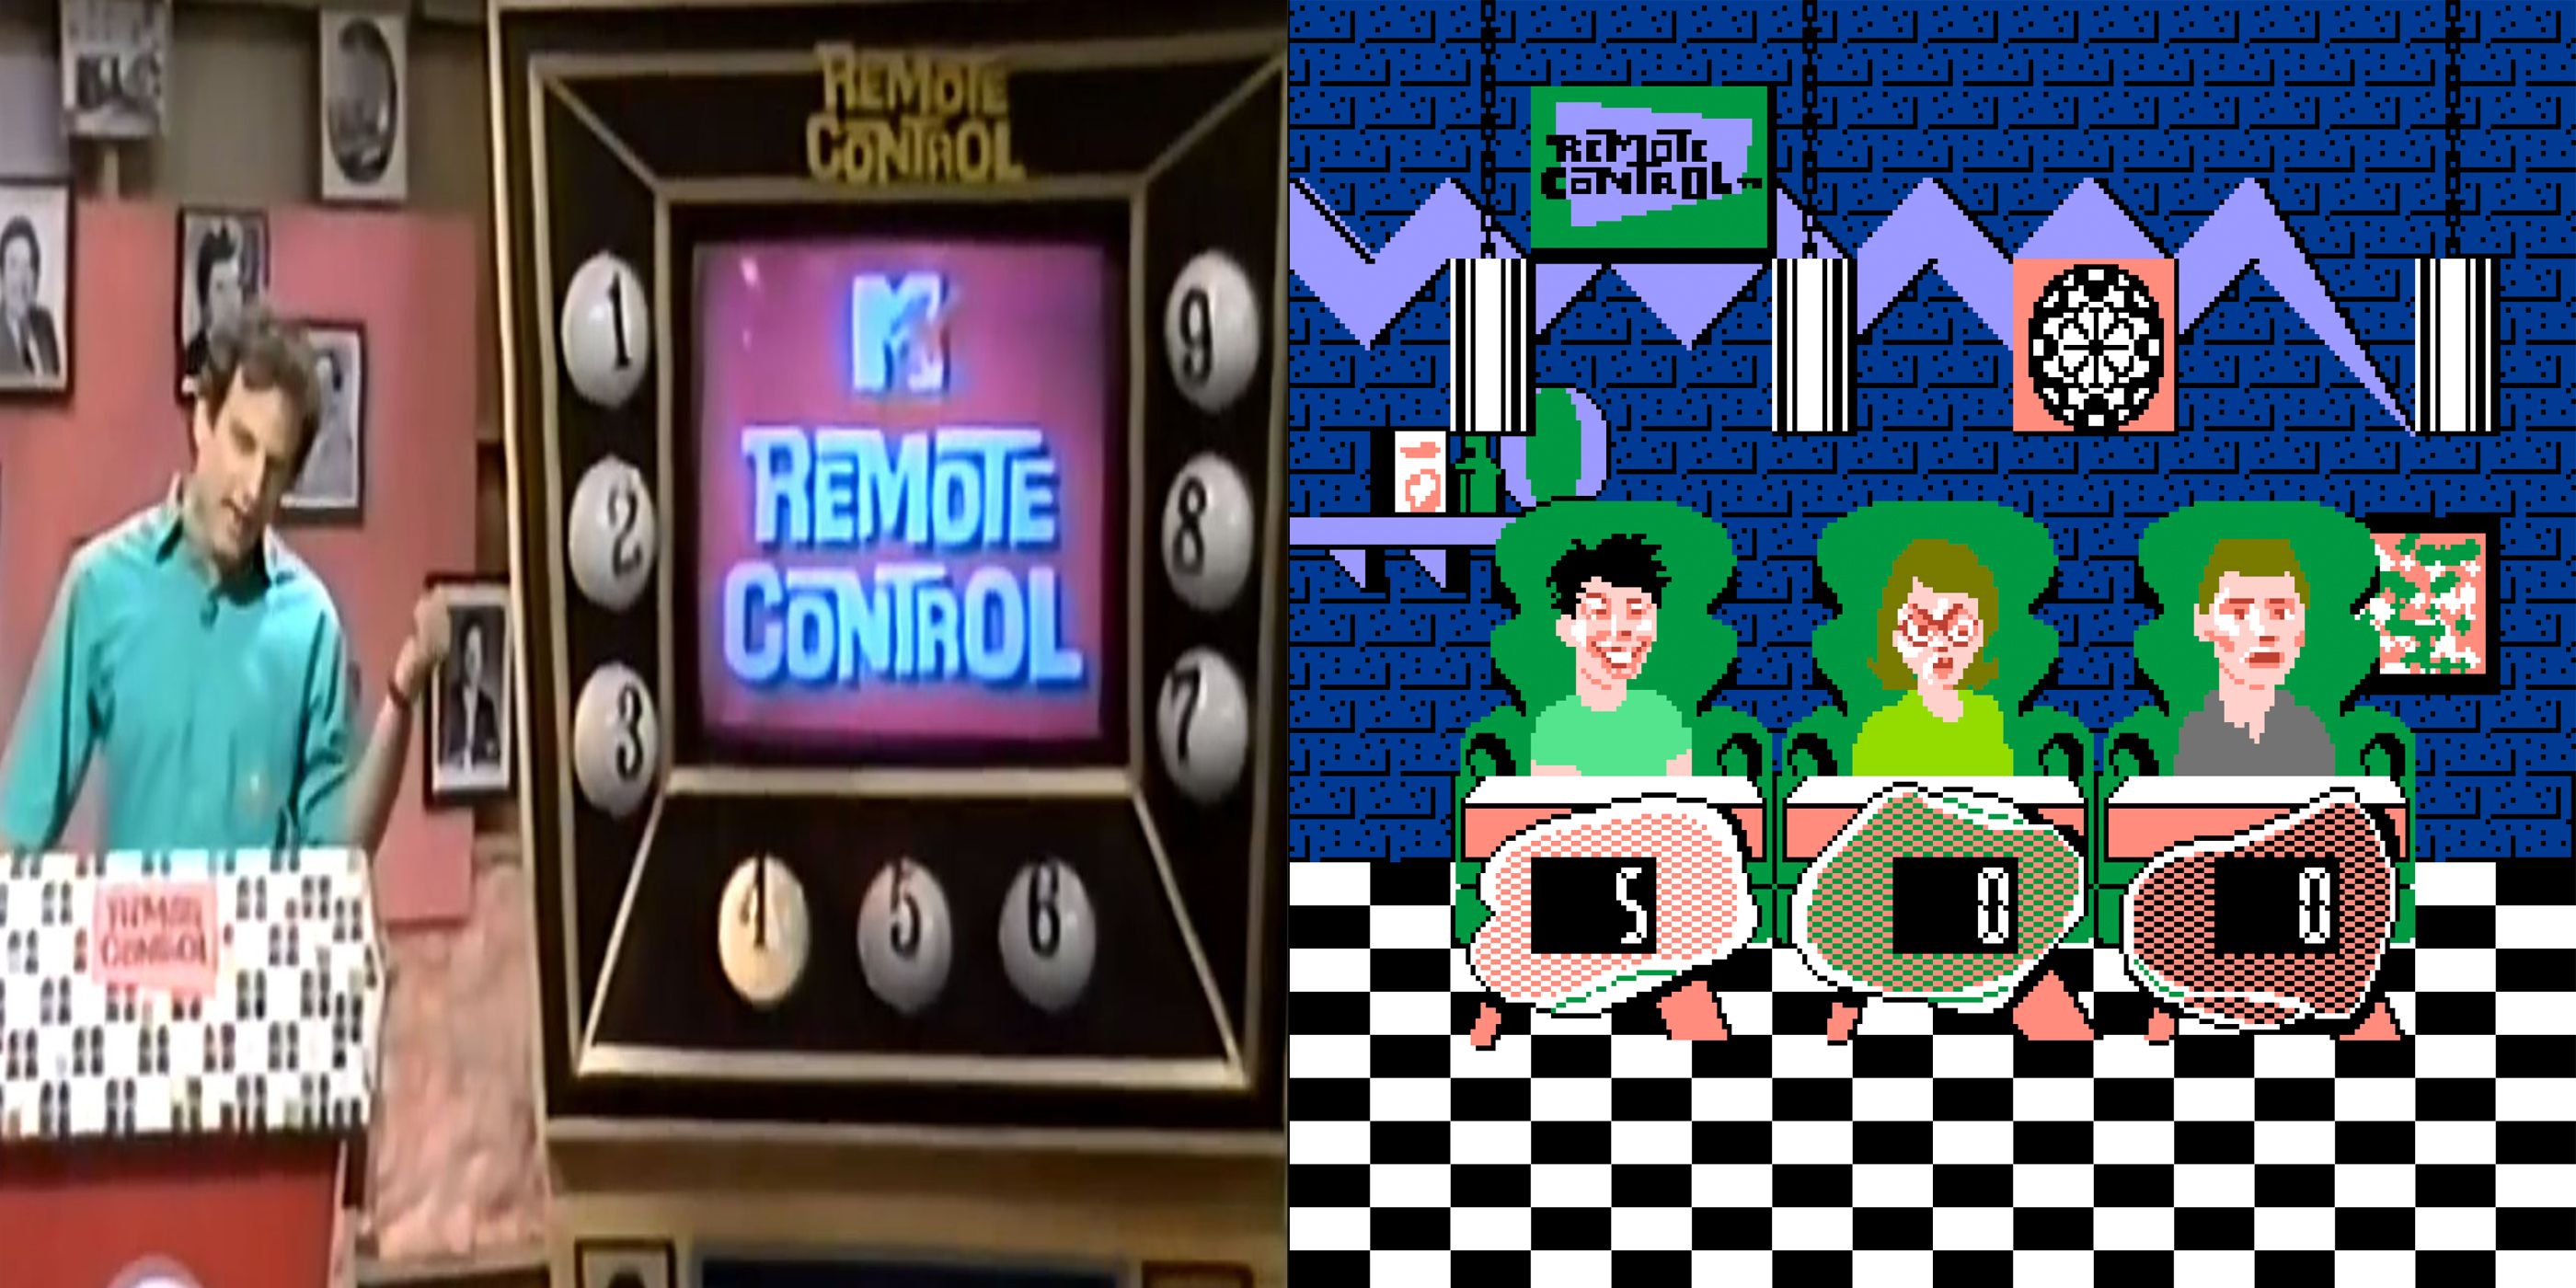 NES adaptation of MTV's Remote Control